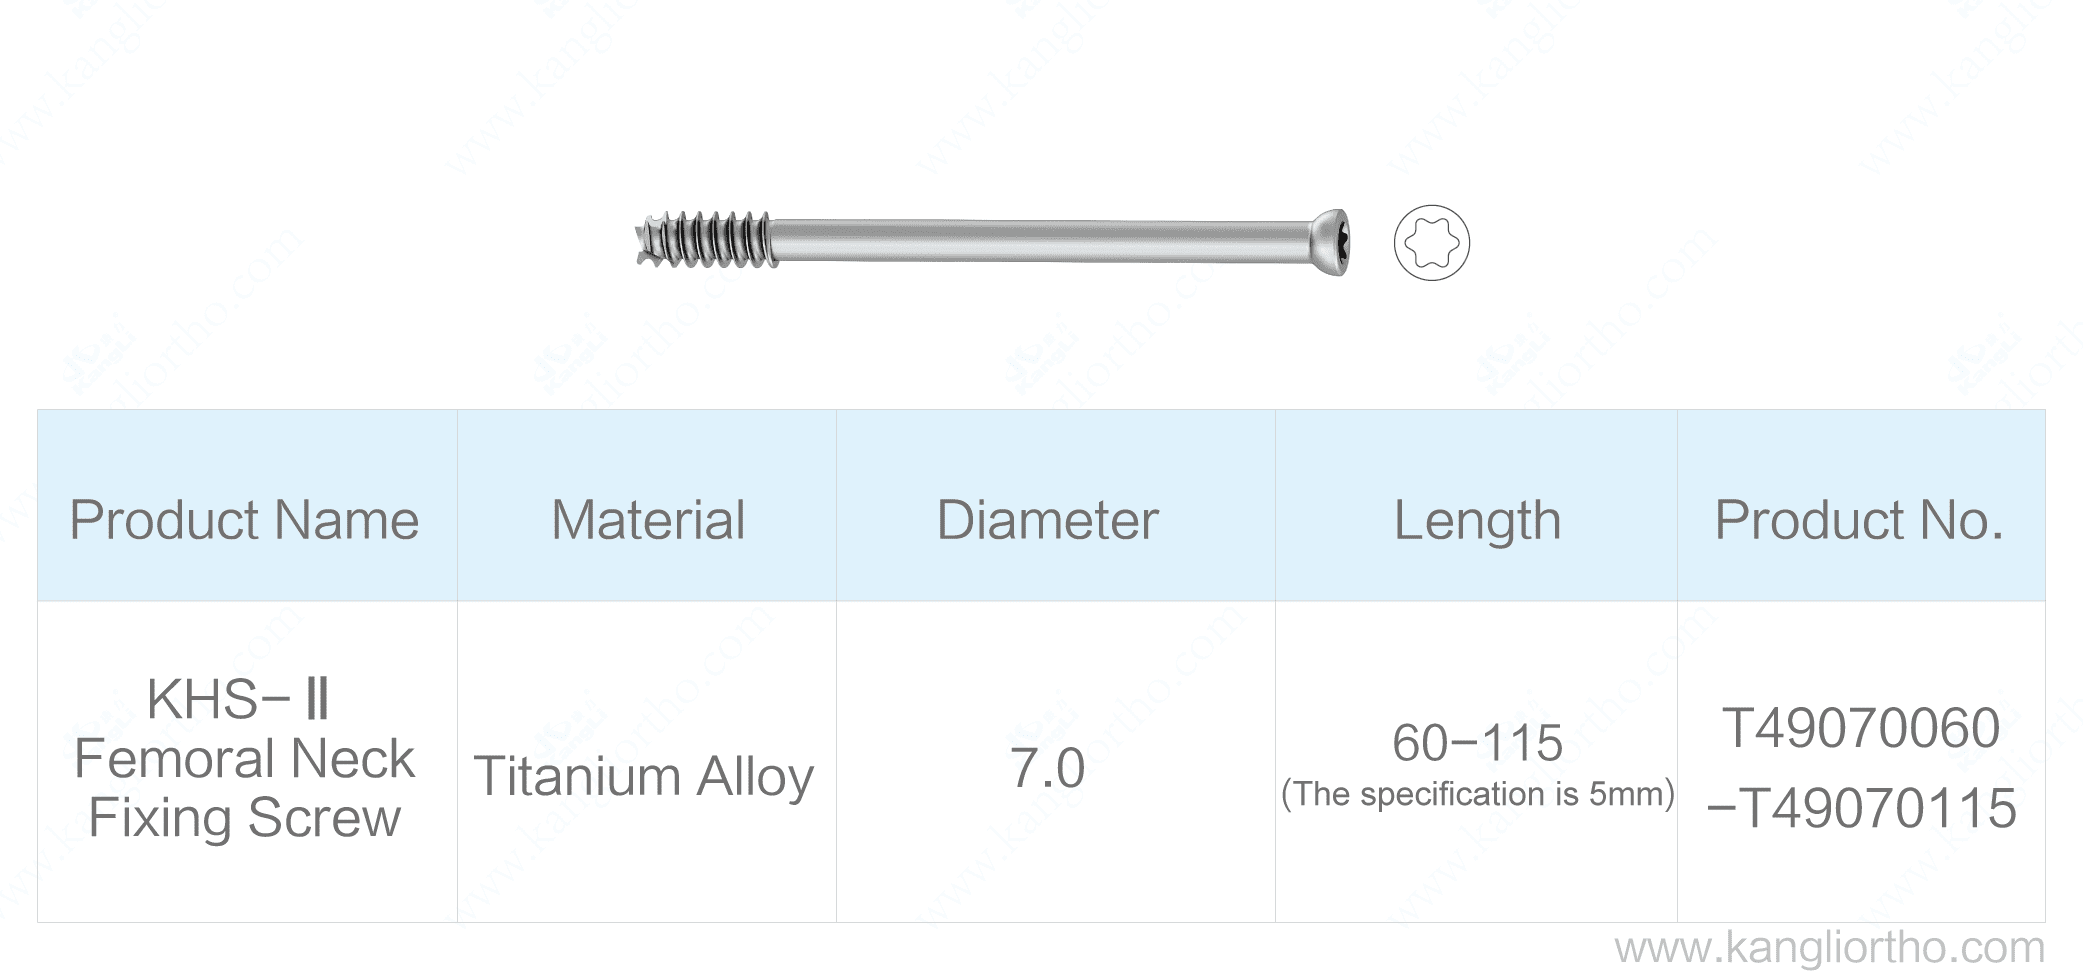 khs-ii-femoral-neck-fixing-screw-specifications